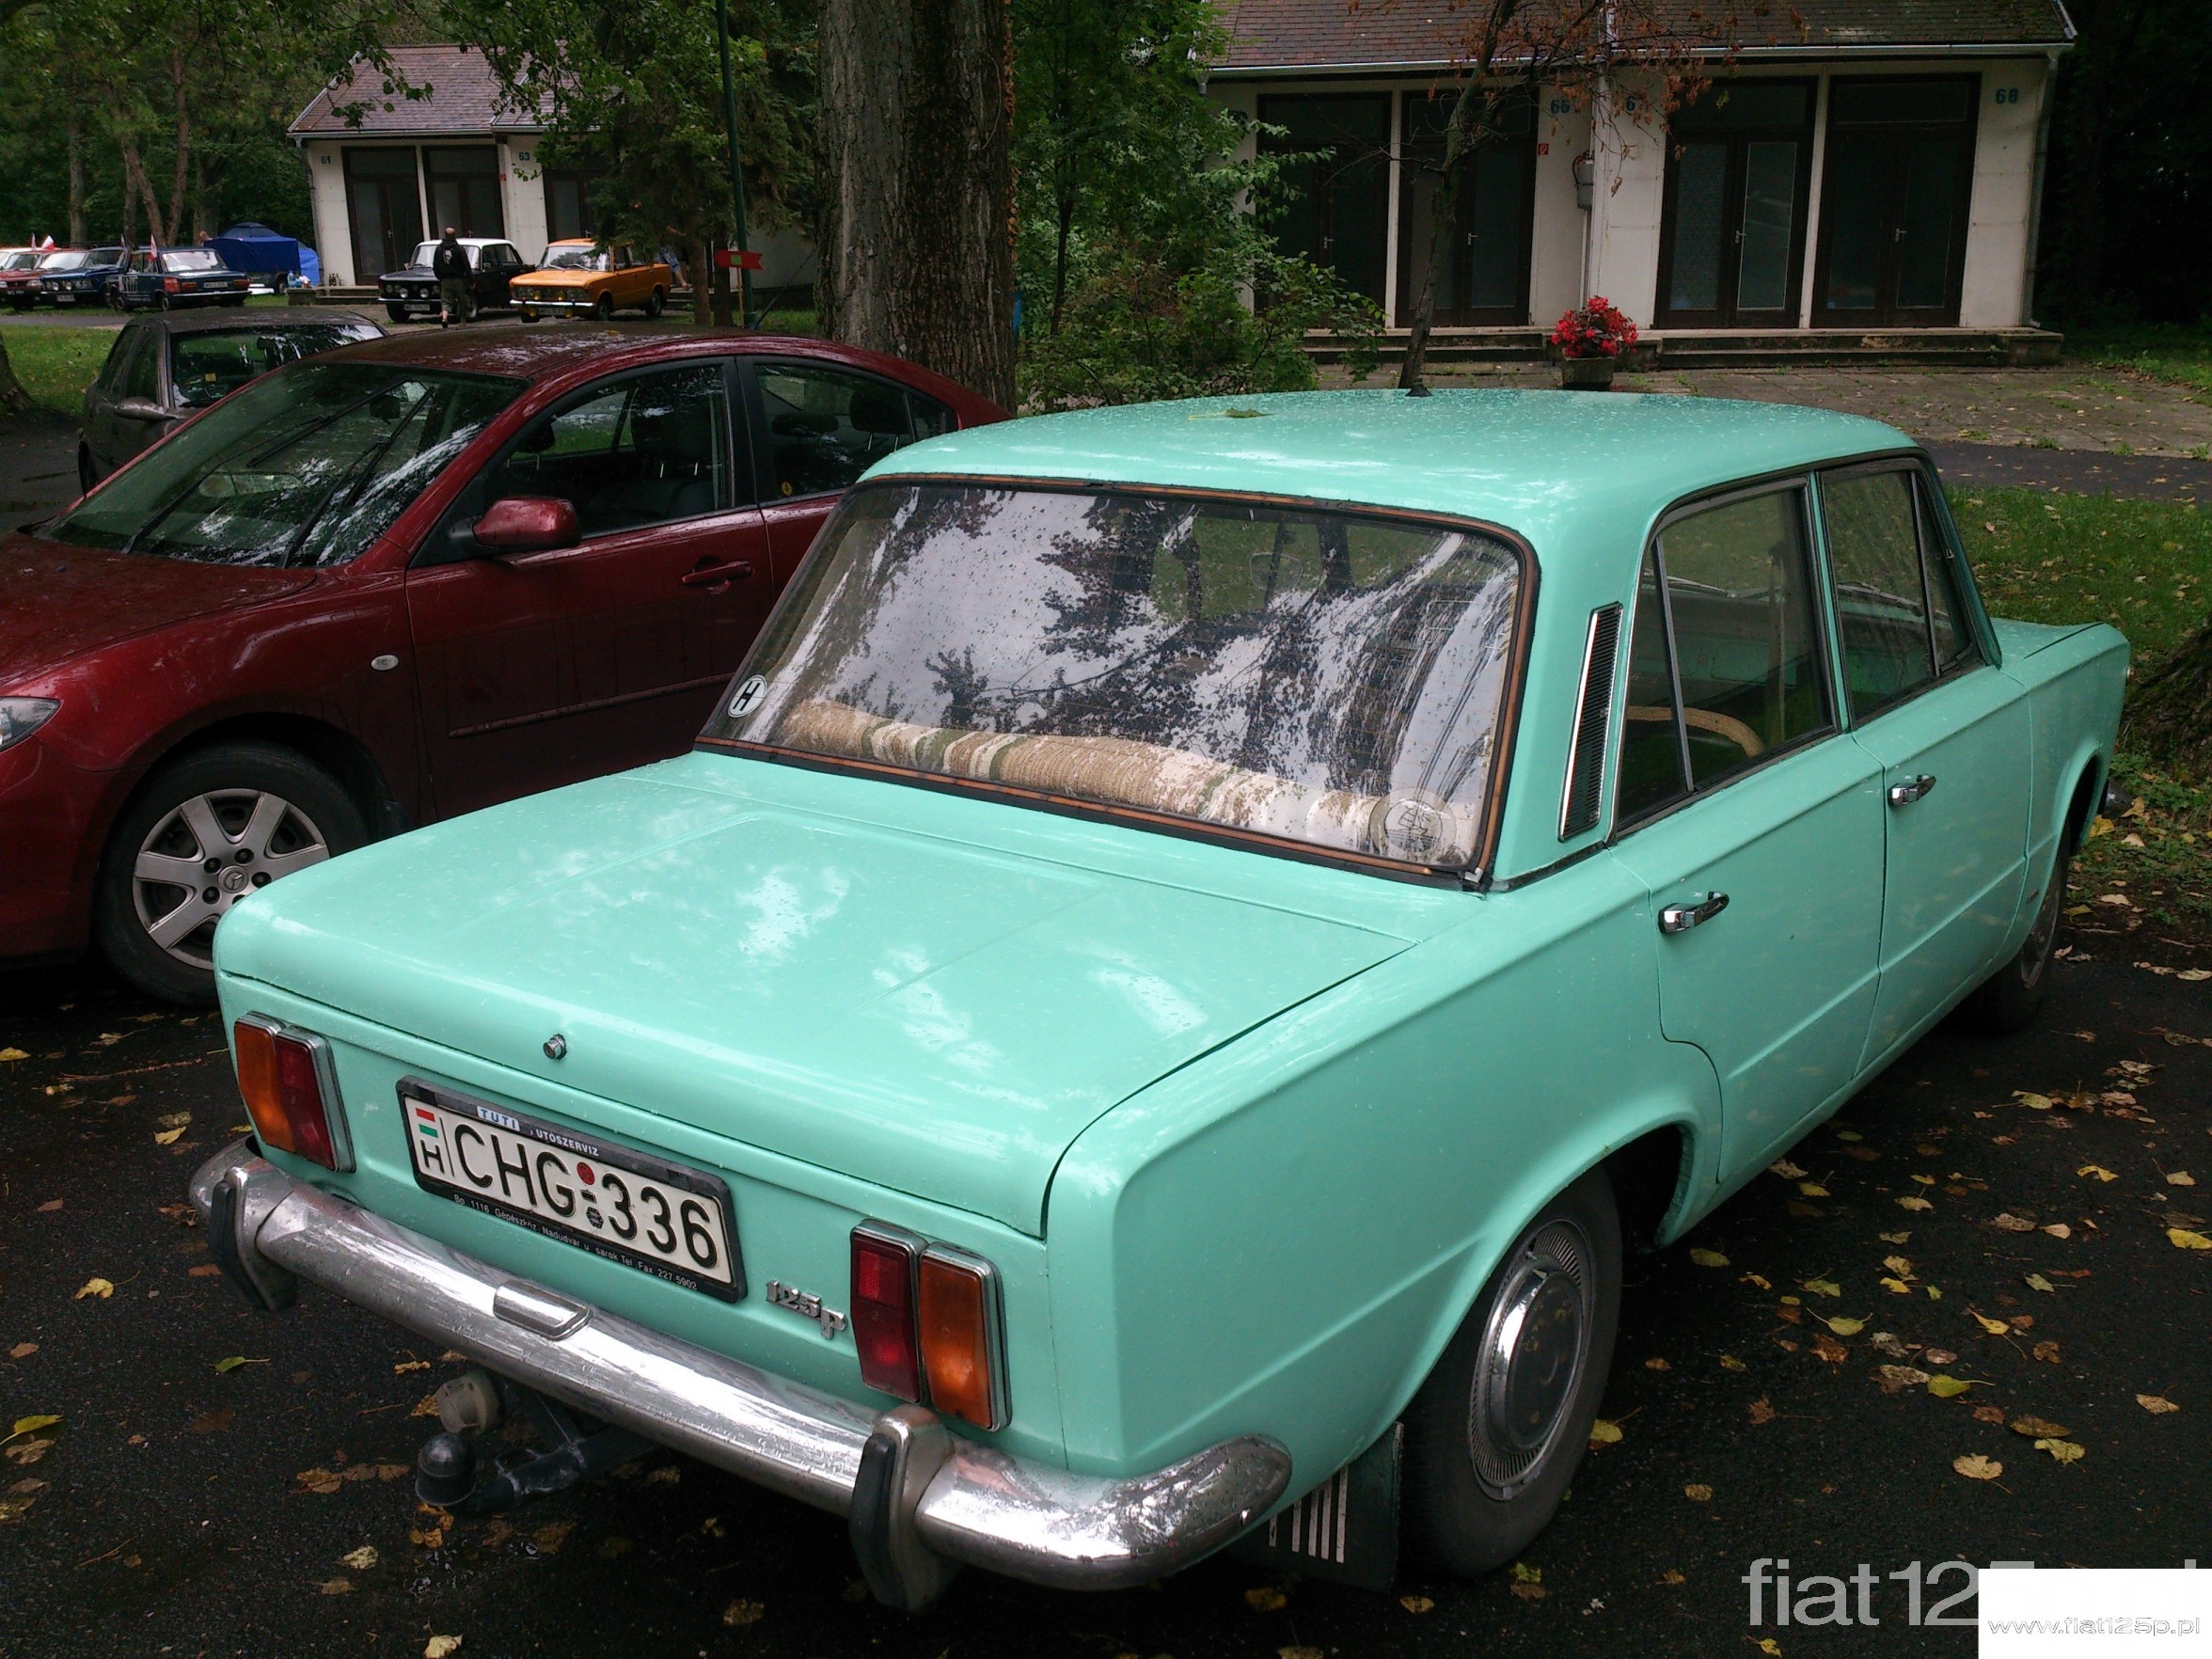  Polski  Fiat  125p fiat125p pl